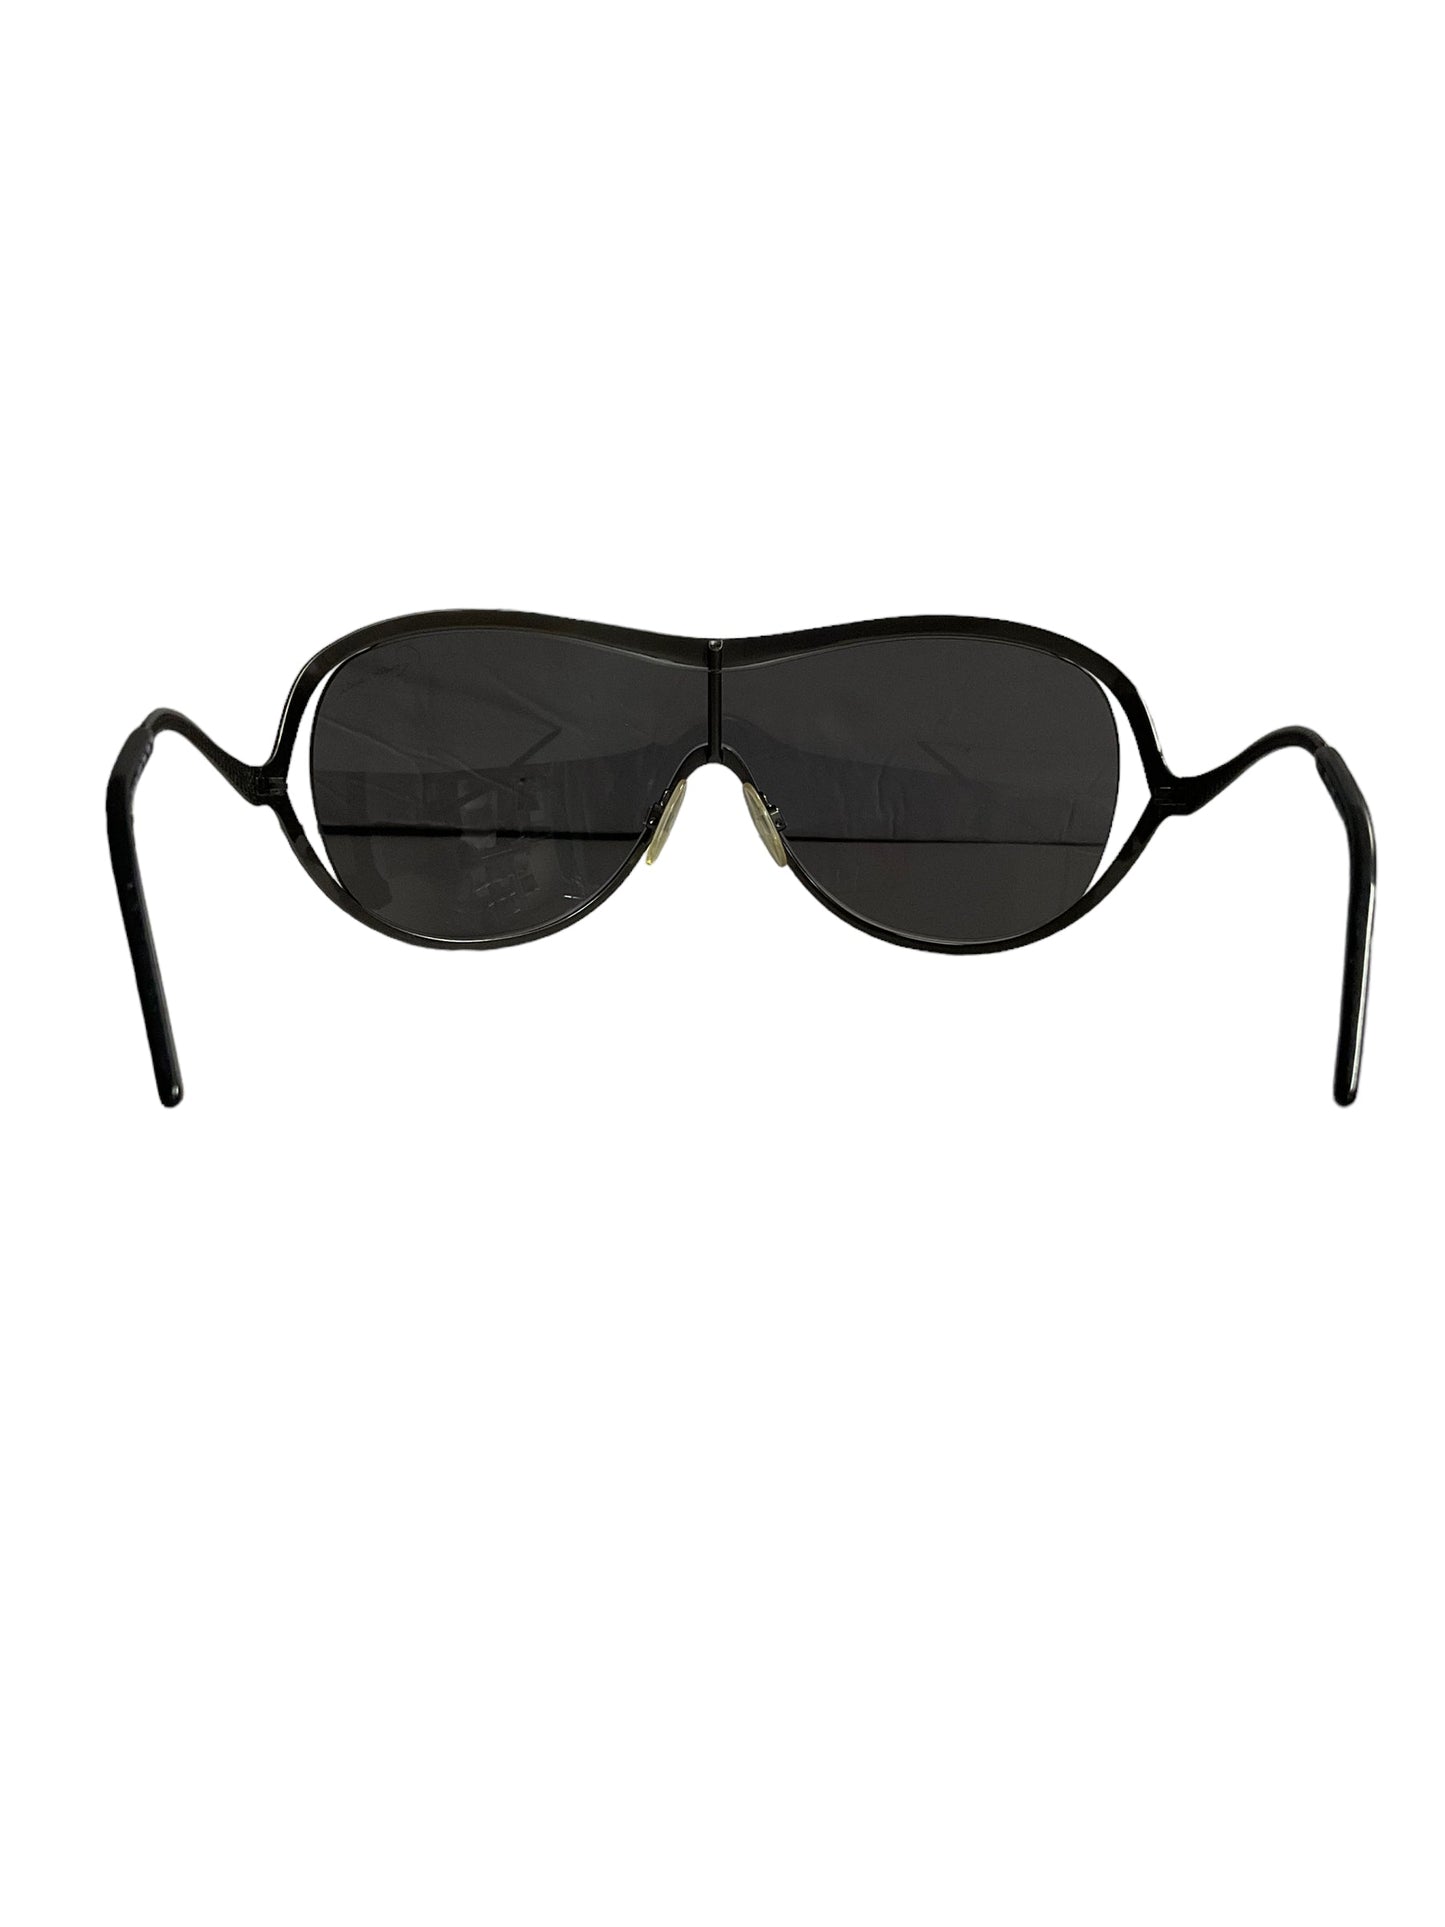 Sunglasses Designer By Roberto Cavalli